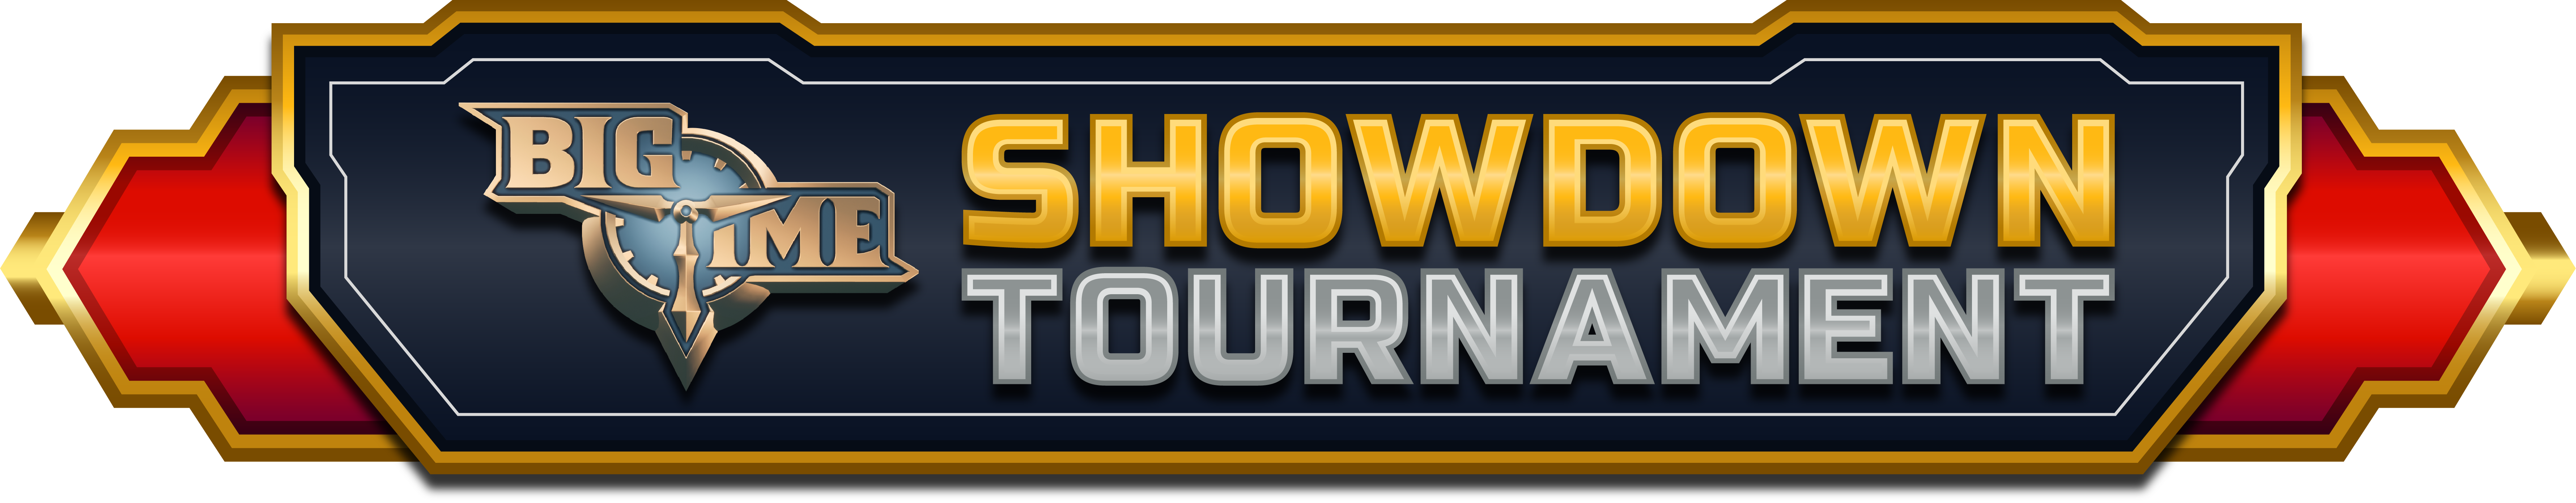 Big Time Showdown Tournament